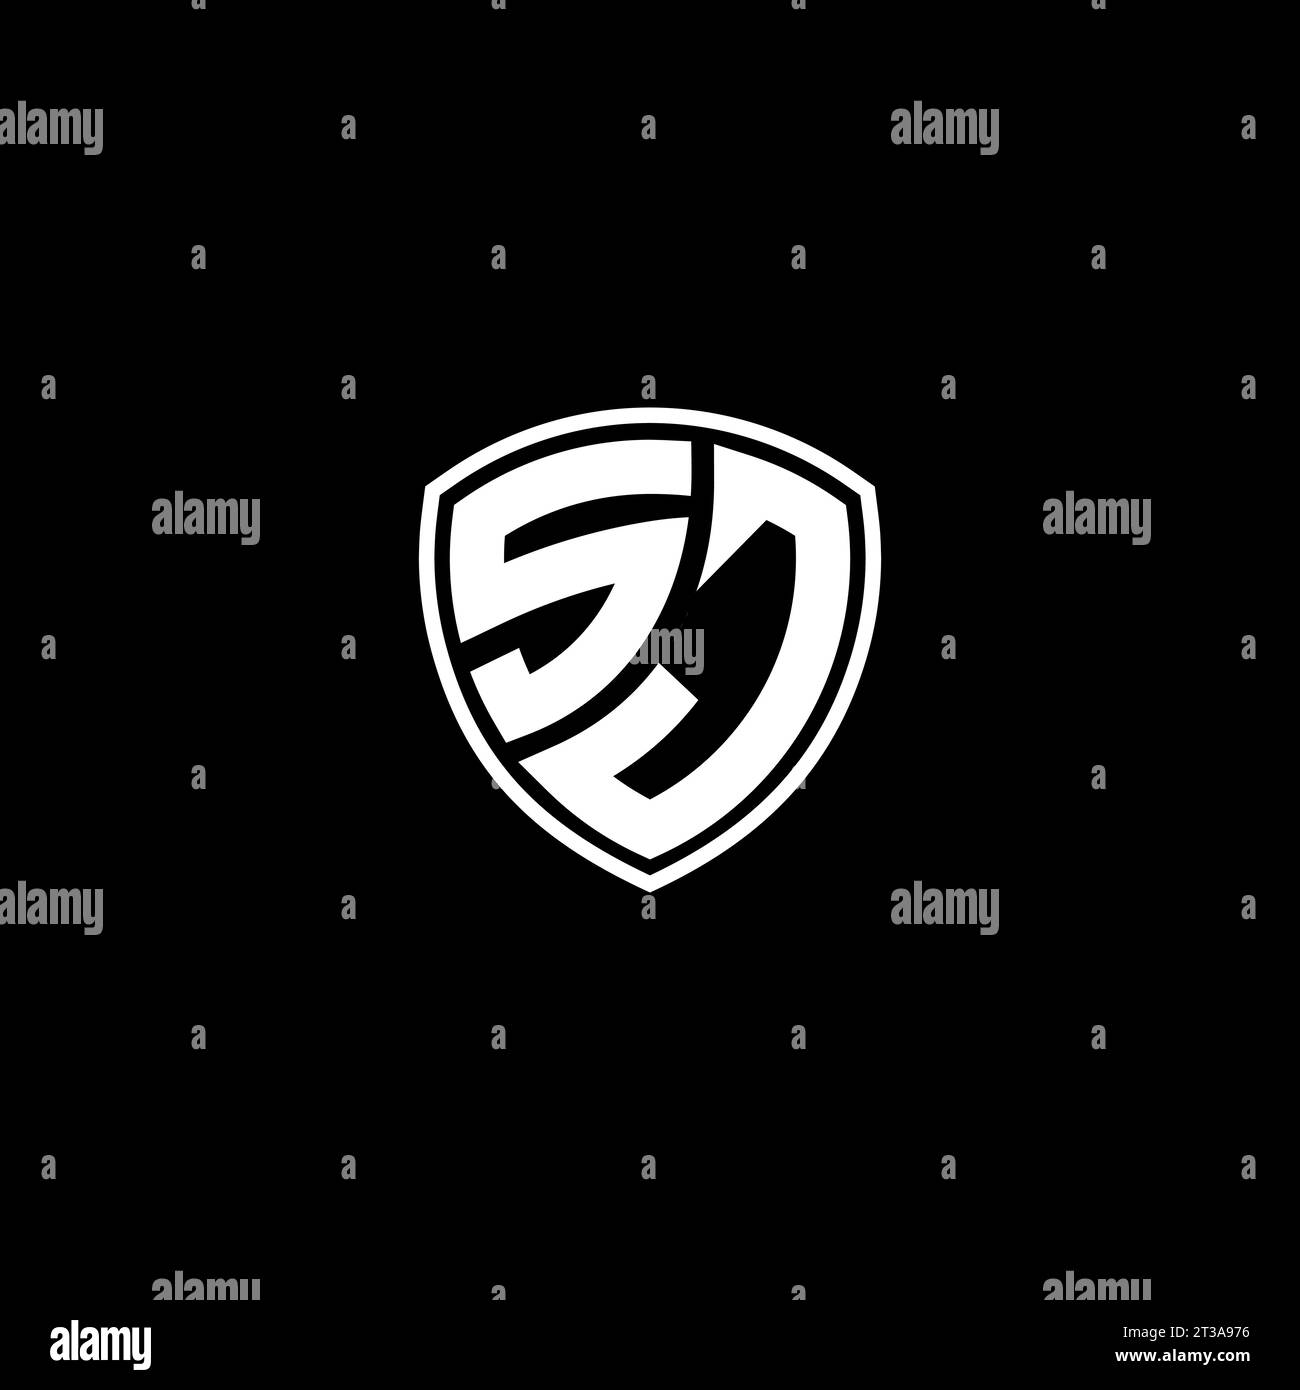 SJ logo monogram emblem style with shield shape design template ideas Stock Vector